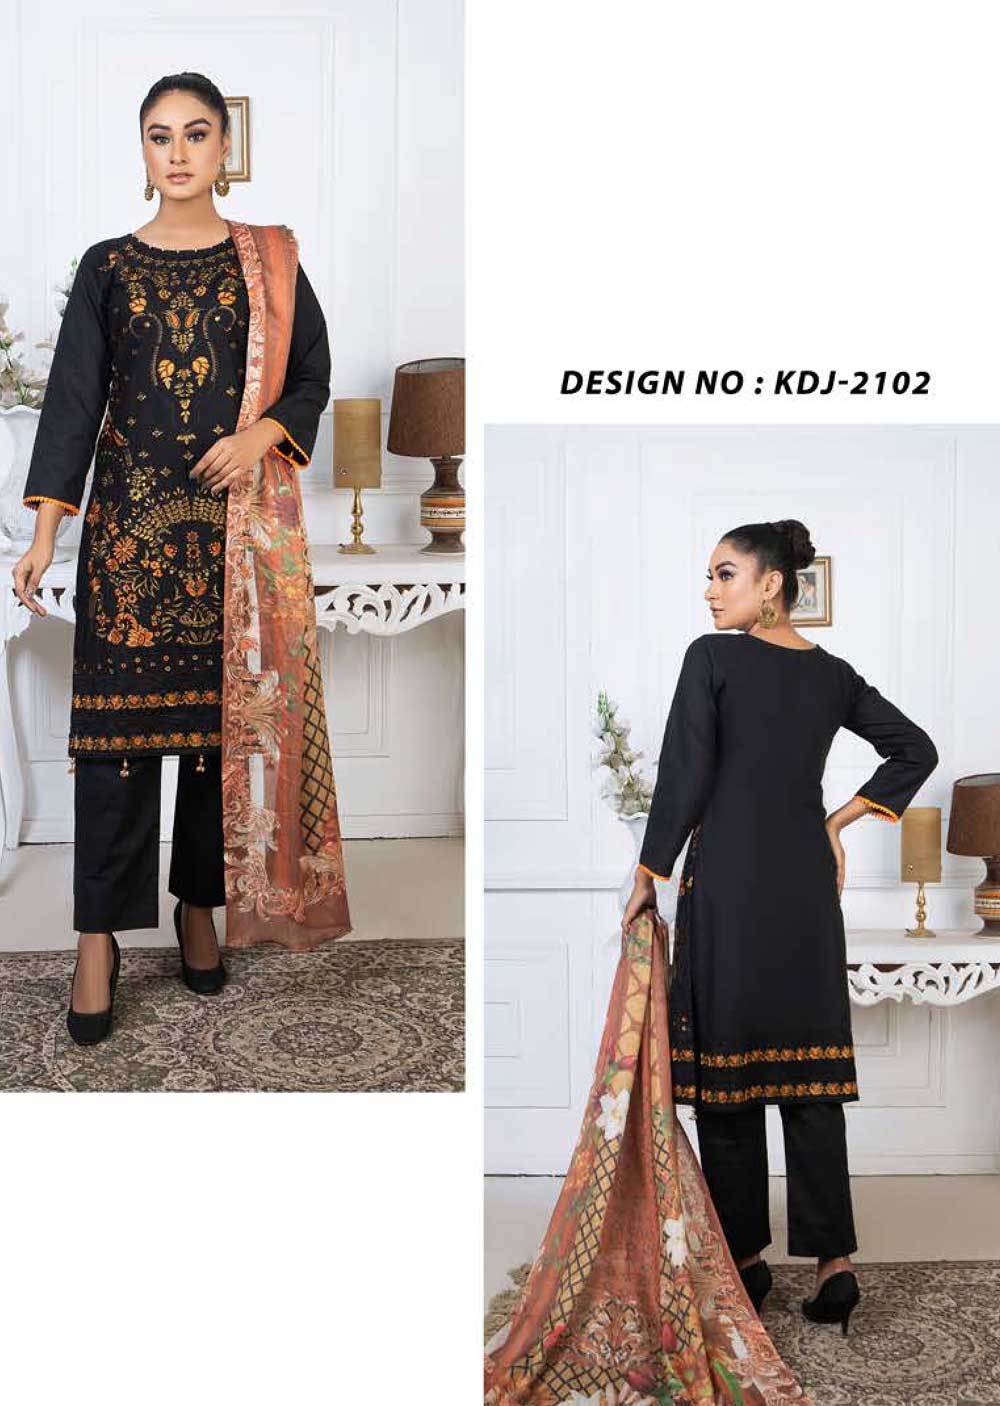 KDJ-2102 - Readymade - Khadijah Vol 21 Designer Suit by Nasir's - Memsaab Online